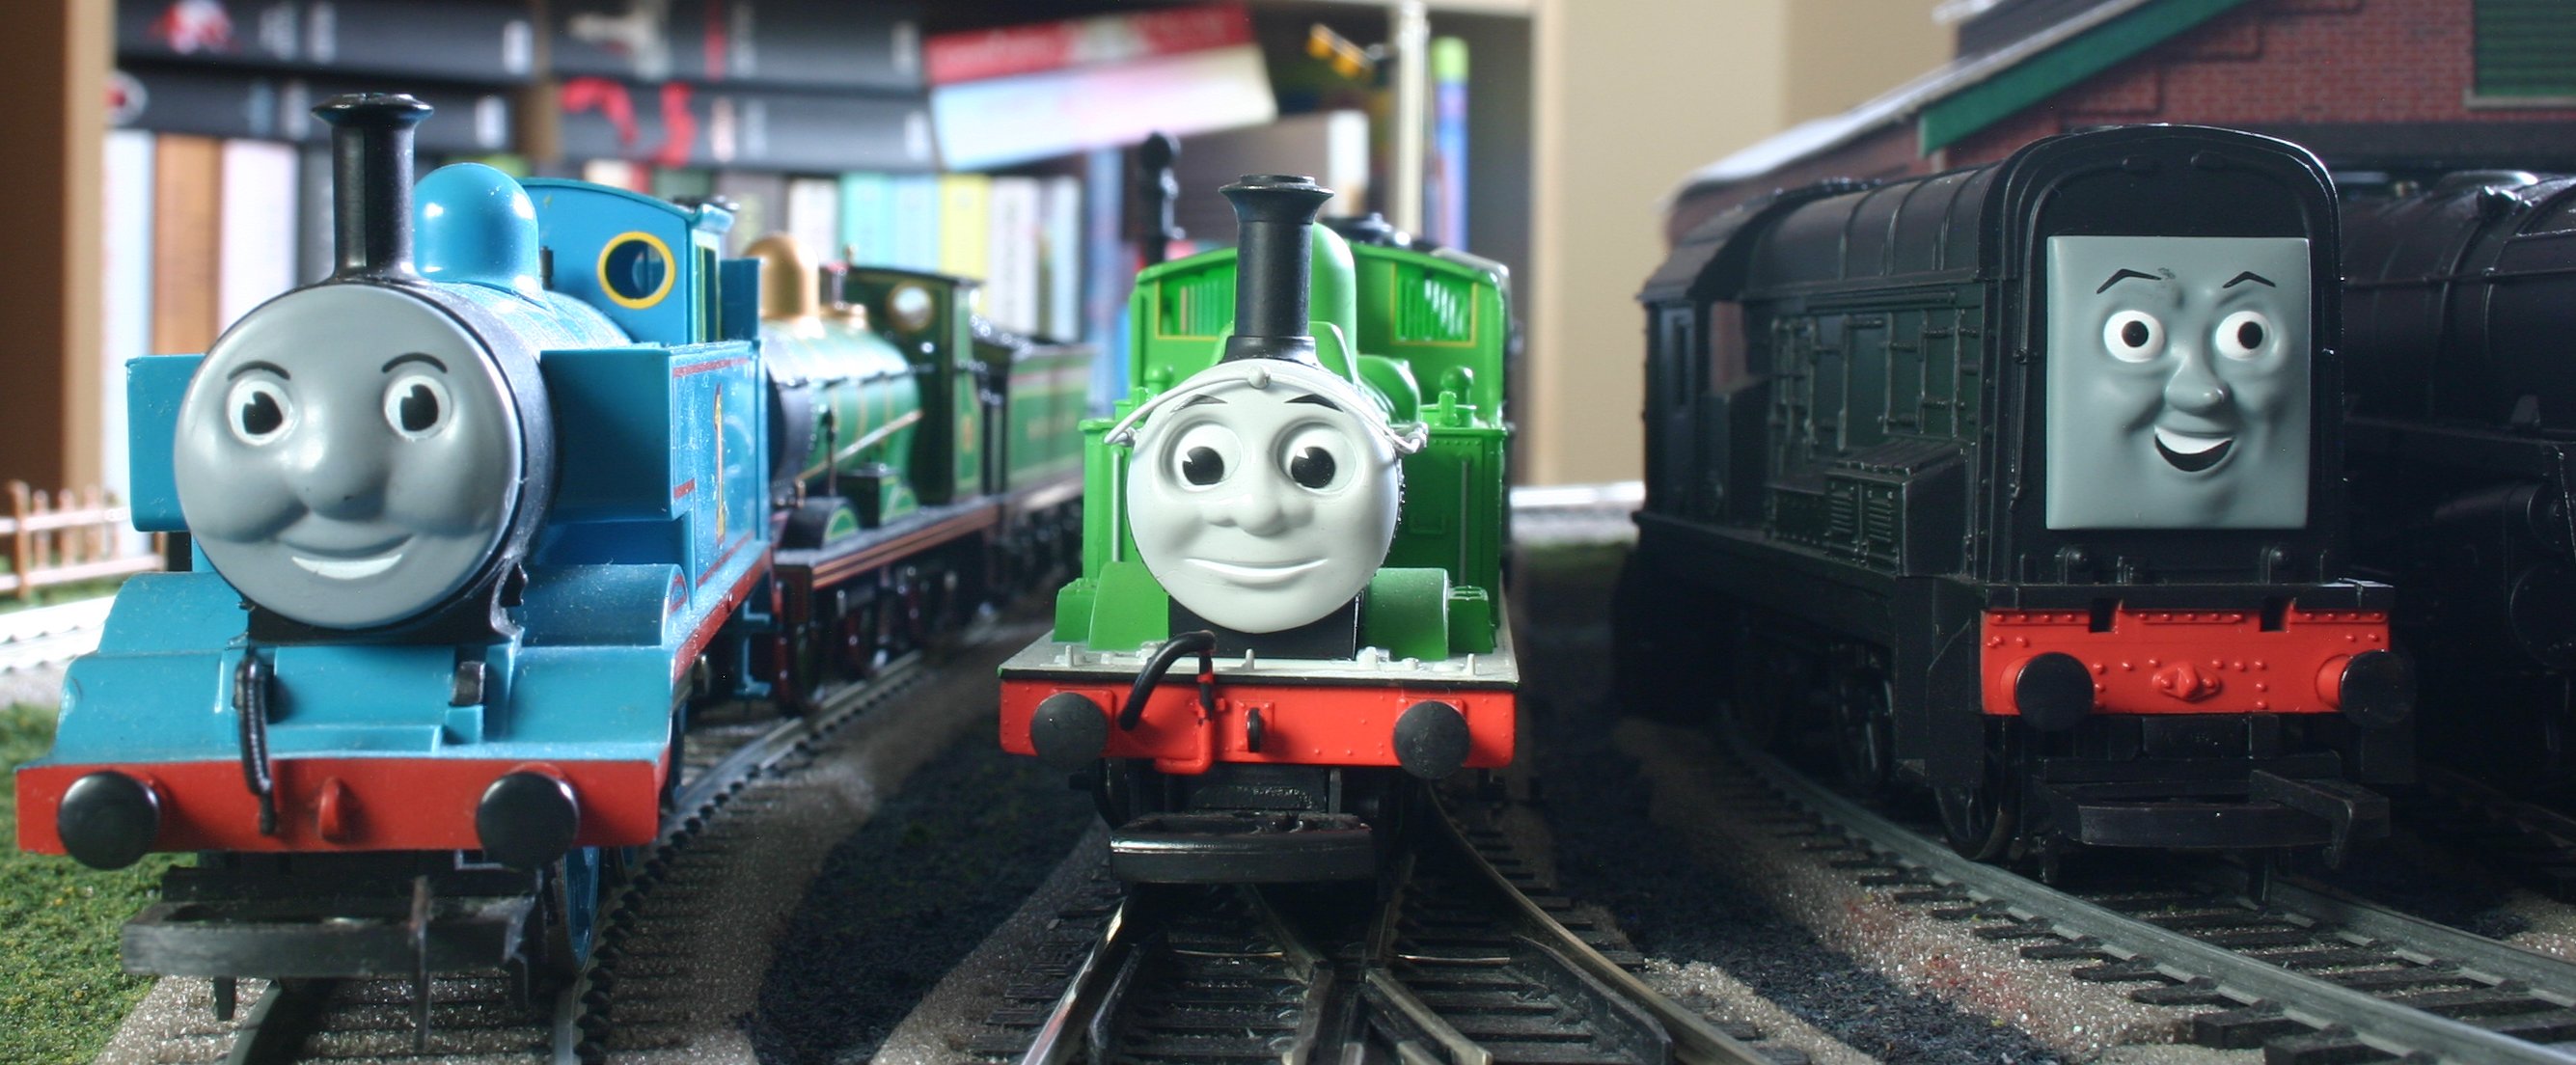 Thomas The Tank Engine & Friends #1